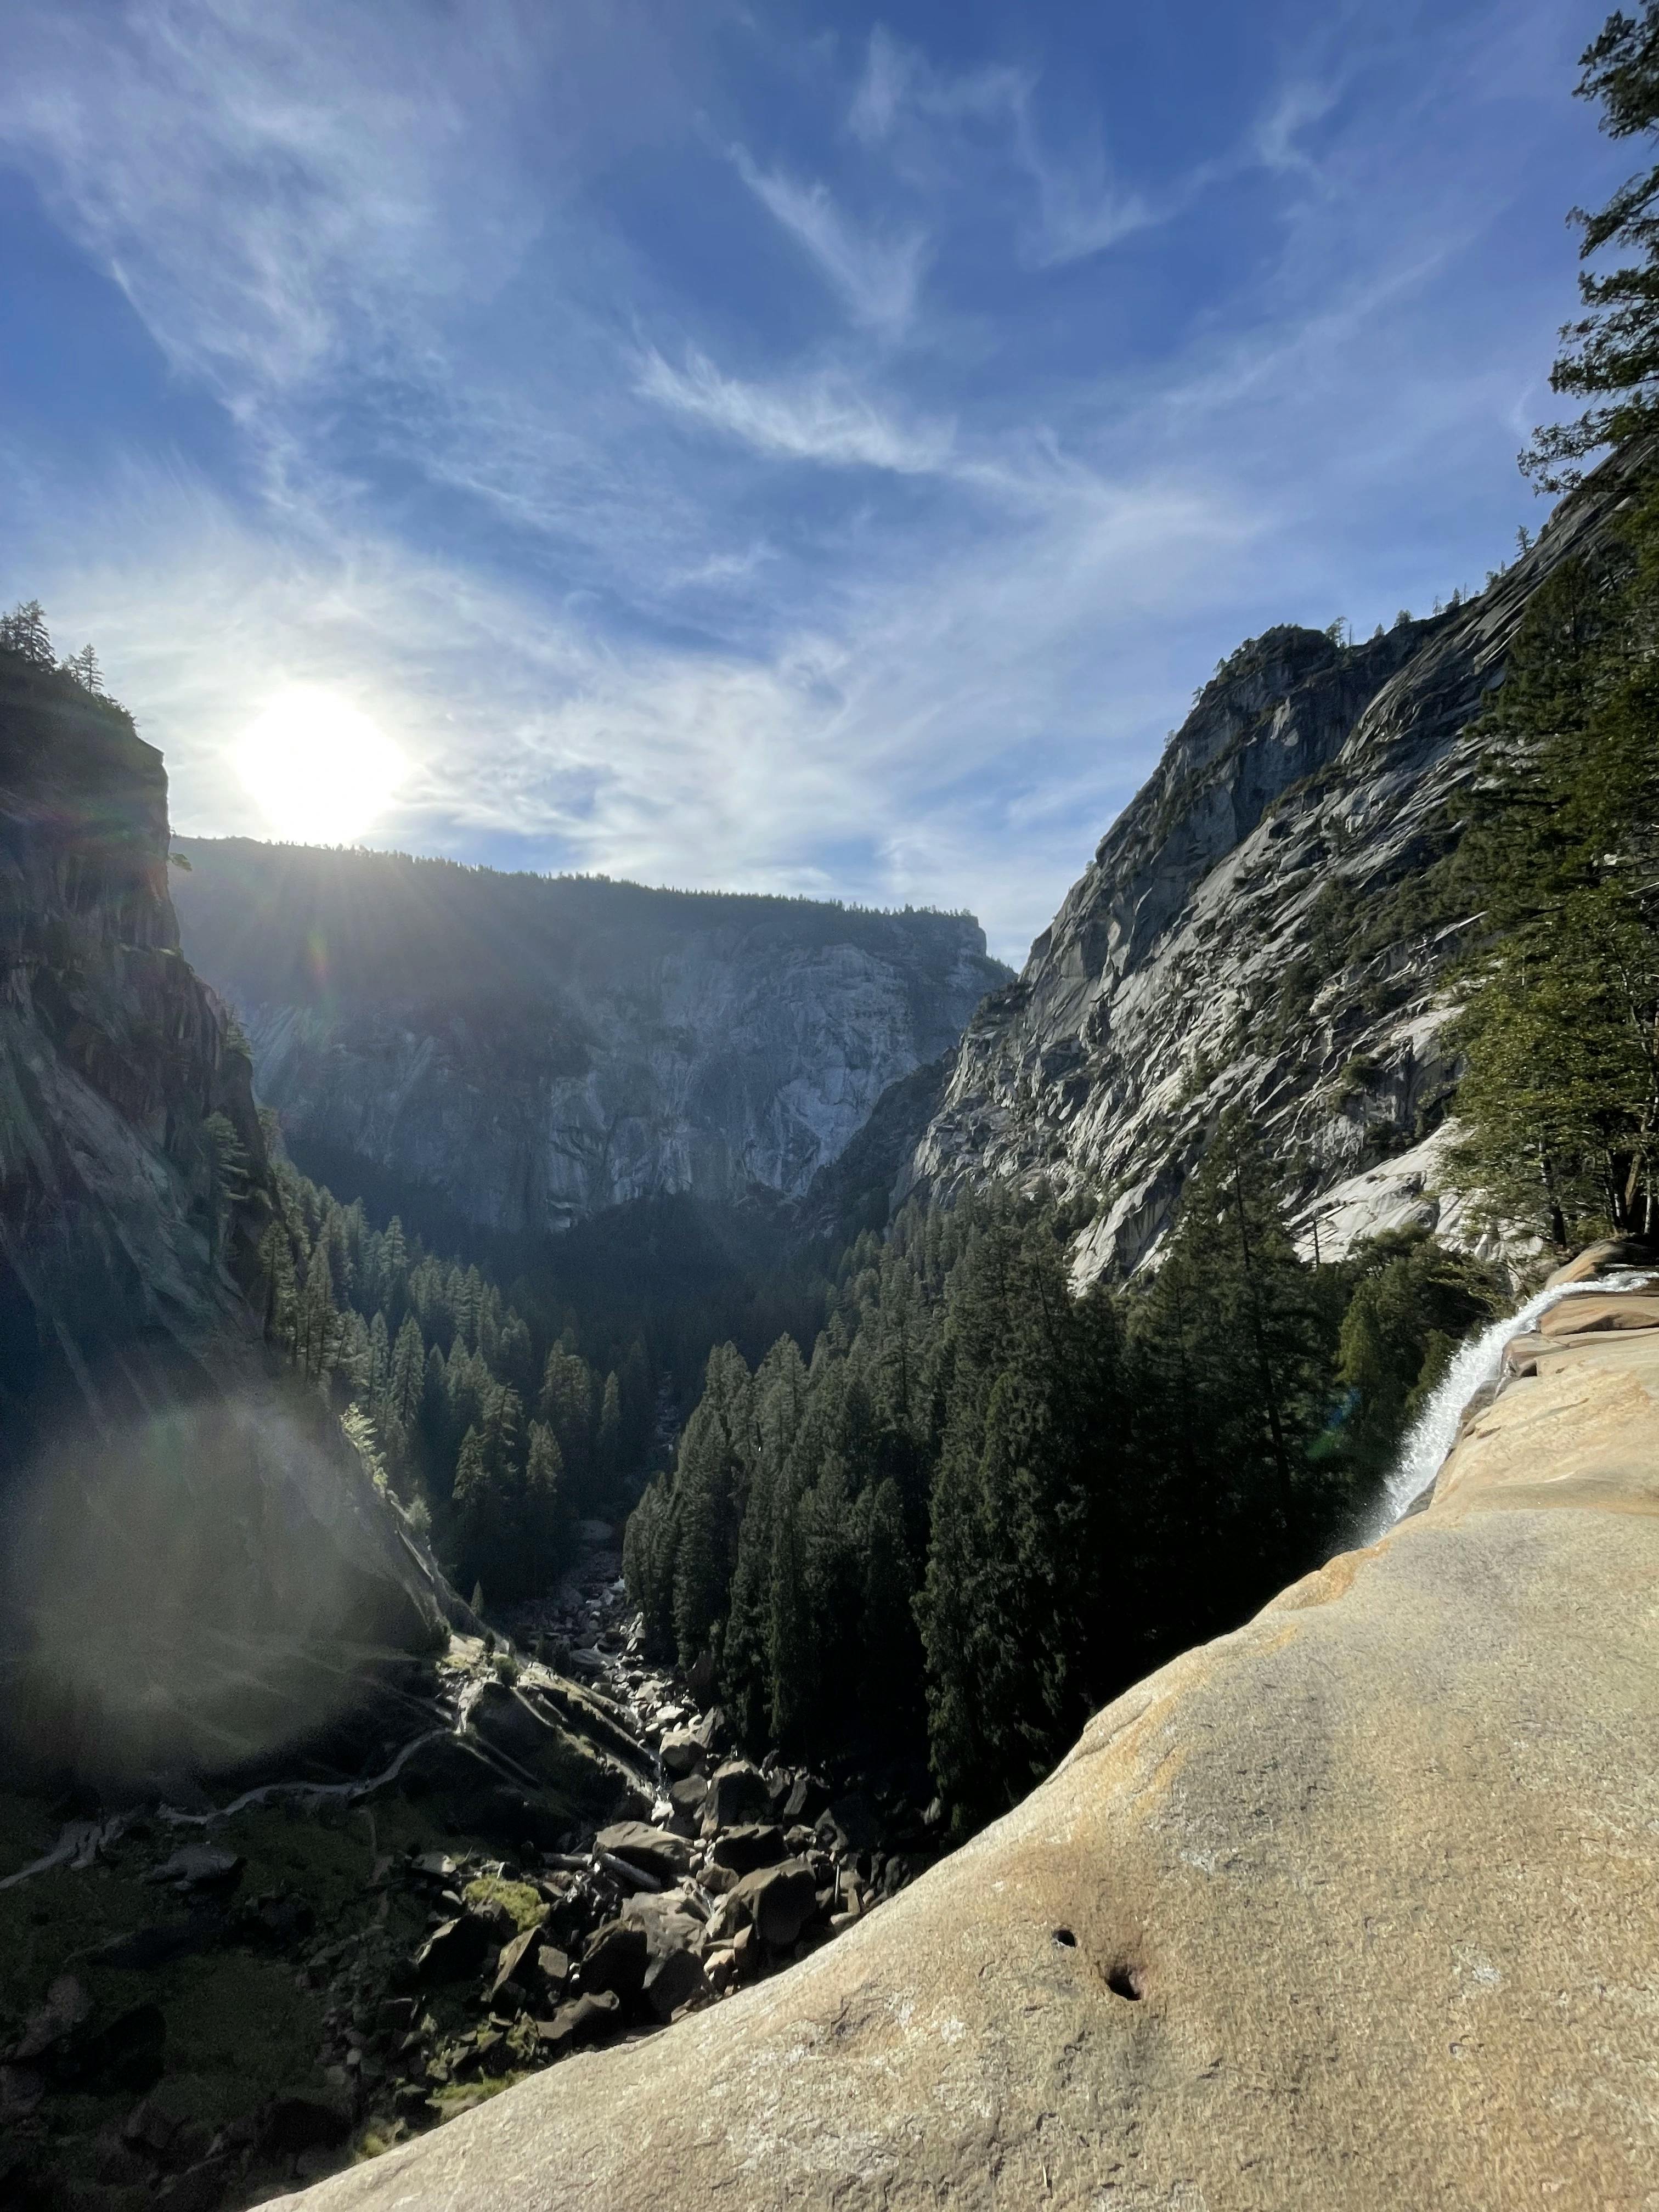 Matt at Yosemite, California